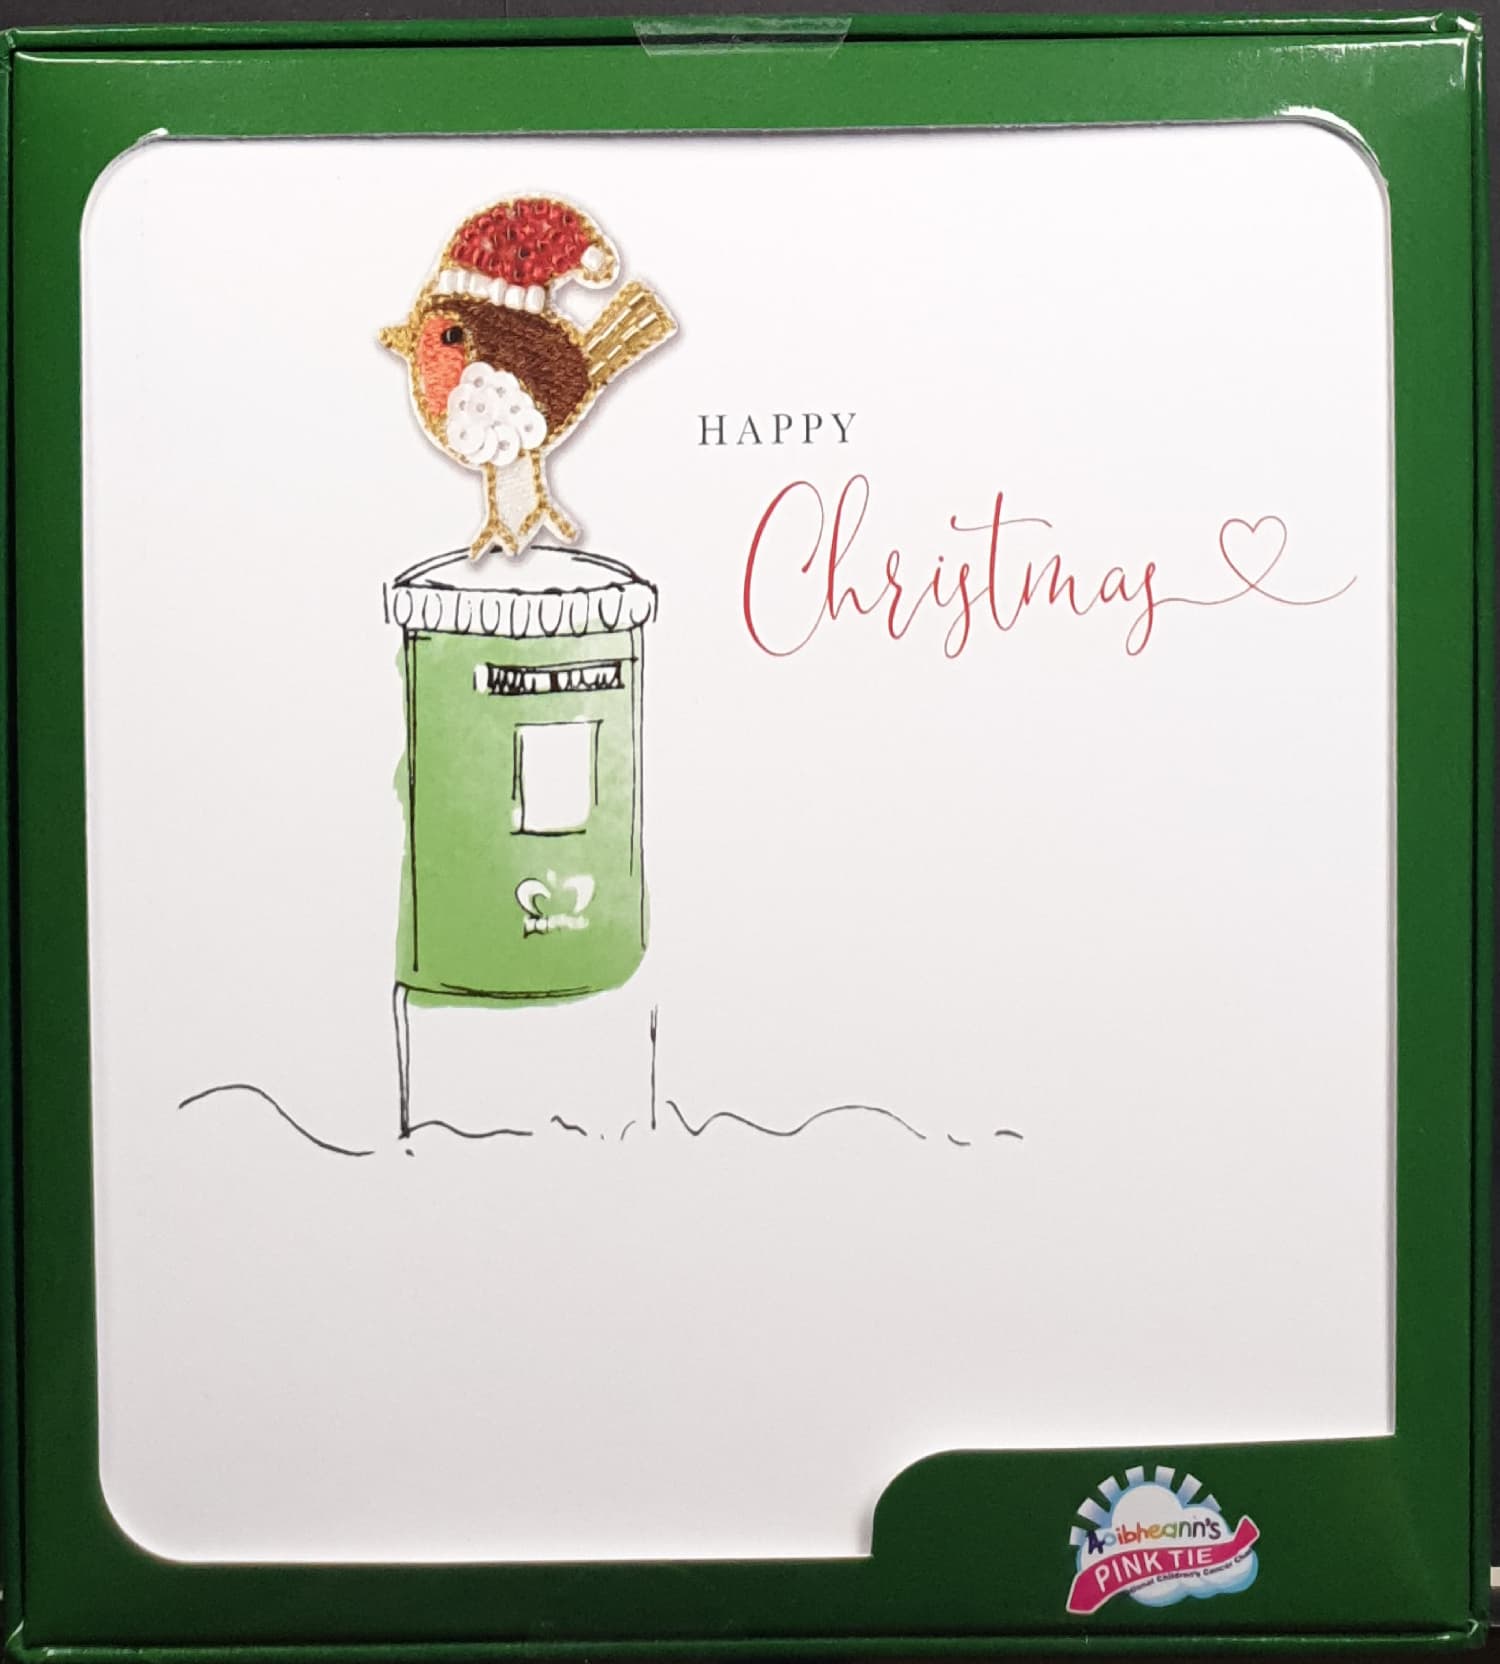 Charity Christmas Card (In Irish & English) - Box of 16 / Aoibheann's Pink Tie - Cute Robin on Green Post Box